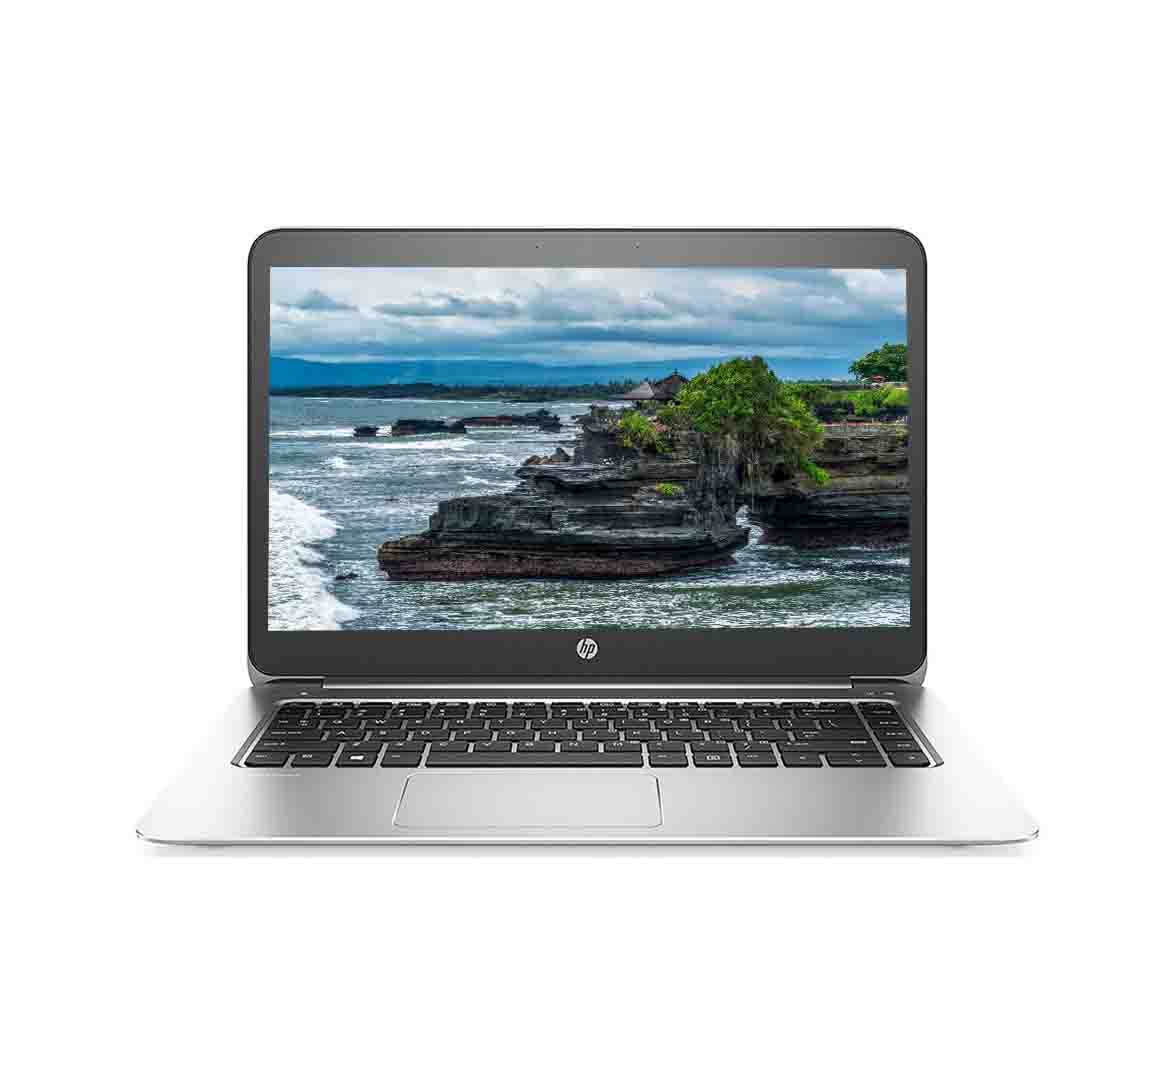 HP EliteBook 1040 G4 Business Laptop, Intel Core i5-7th Gen. CPU, 8GB RAM, 256GB SSD, 14 inch Touchscreen, Windows 10 Pro, Refurbished Laptop